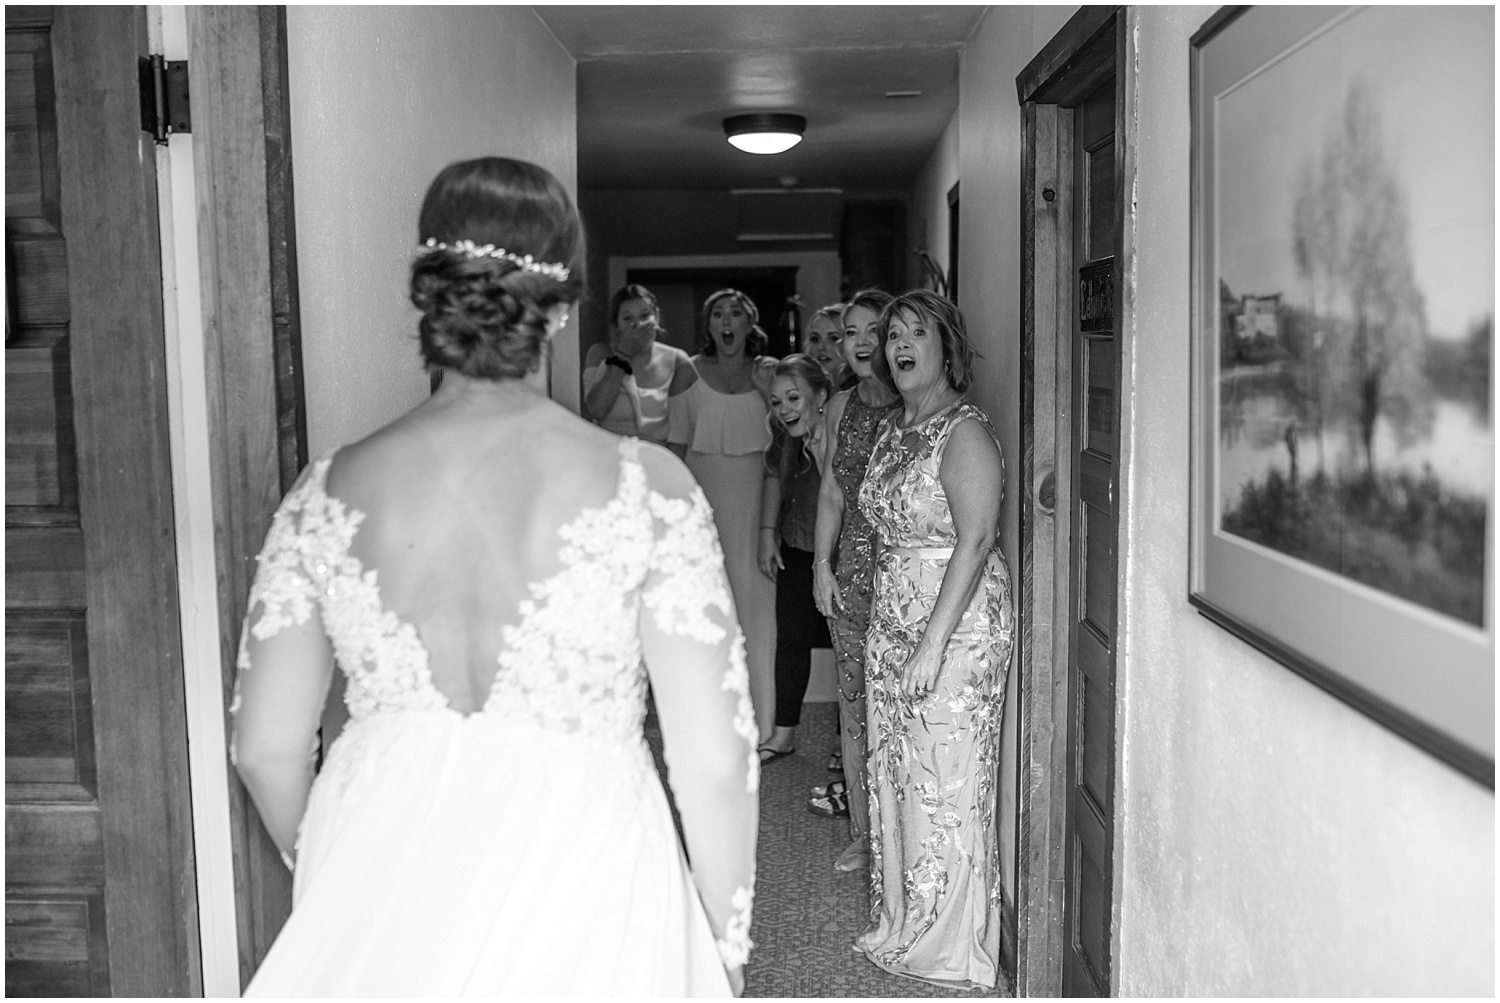 Mom and bridesmaids get first look at bride at Ski Tip Lodge wedding in Keystone Colorado